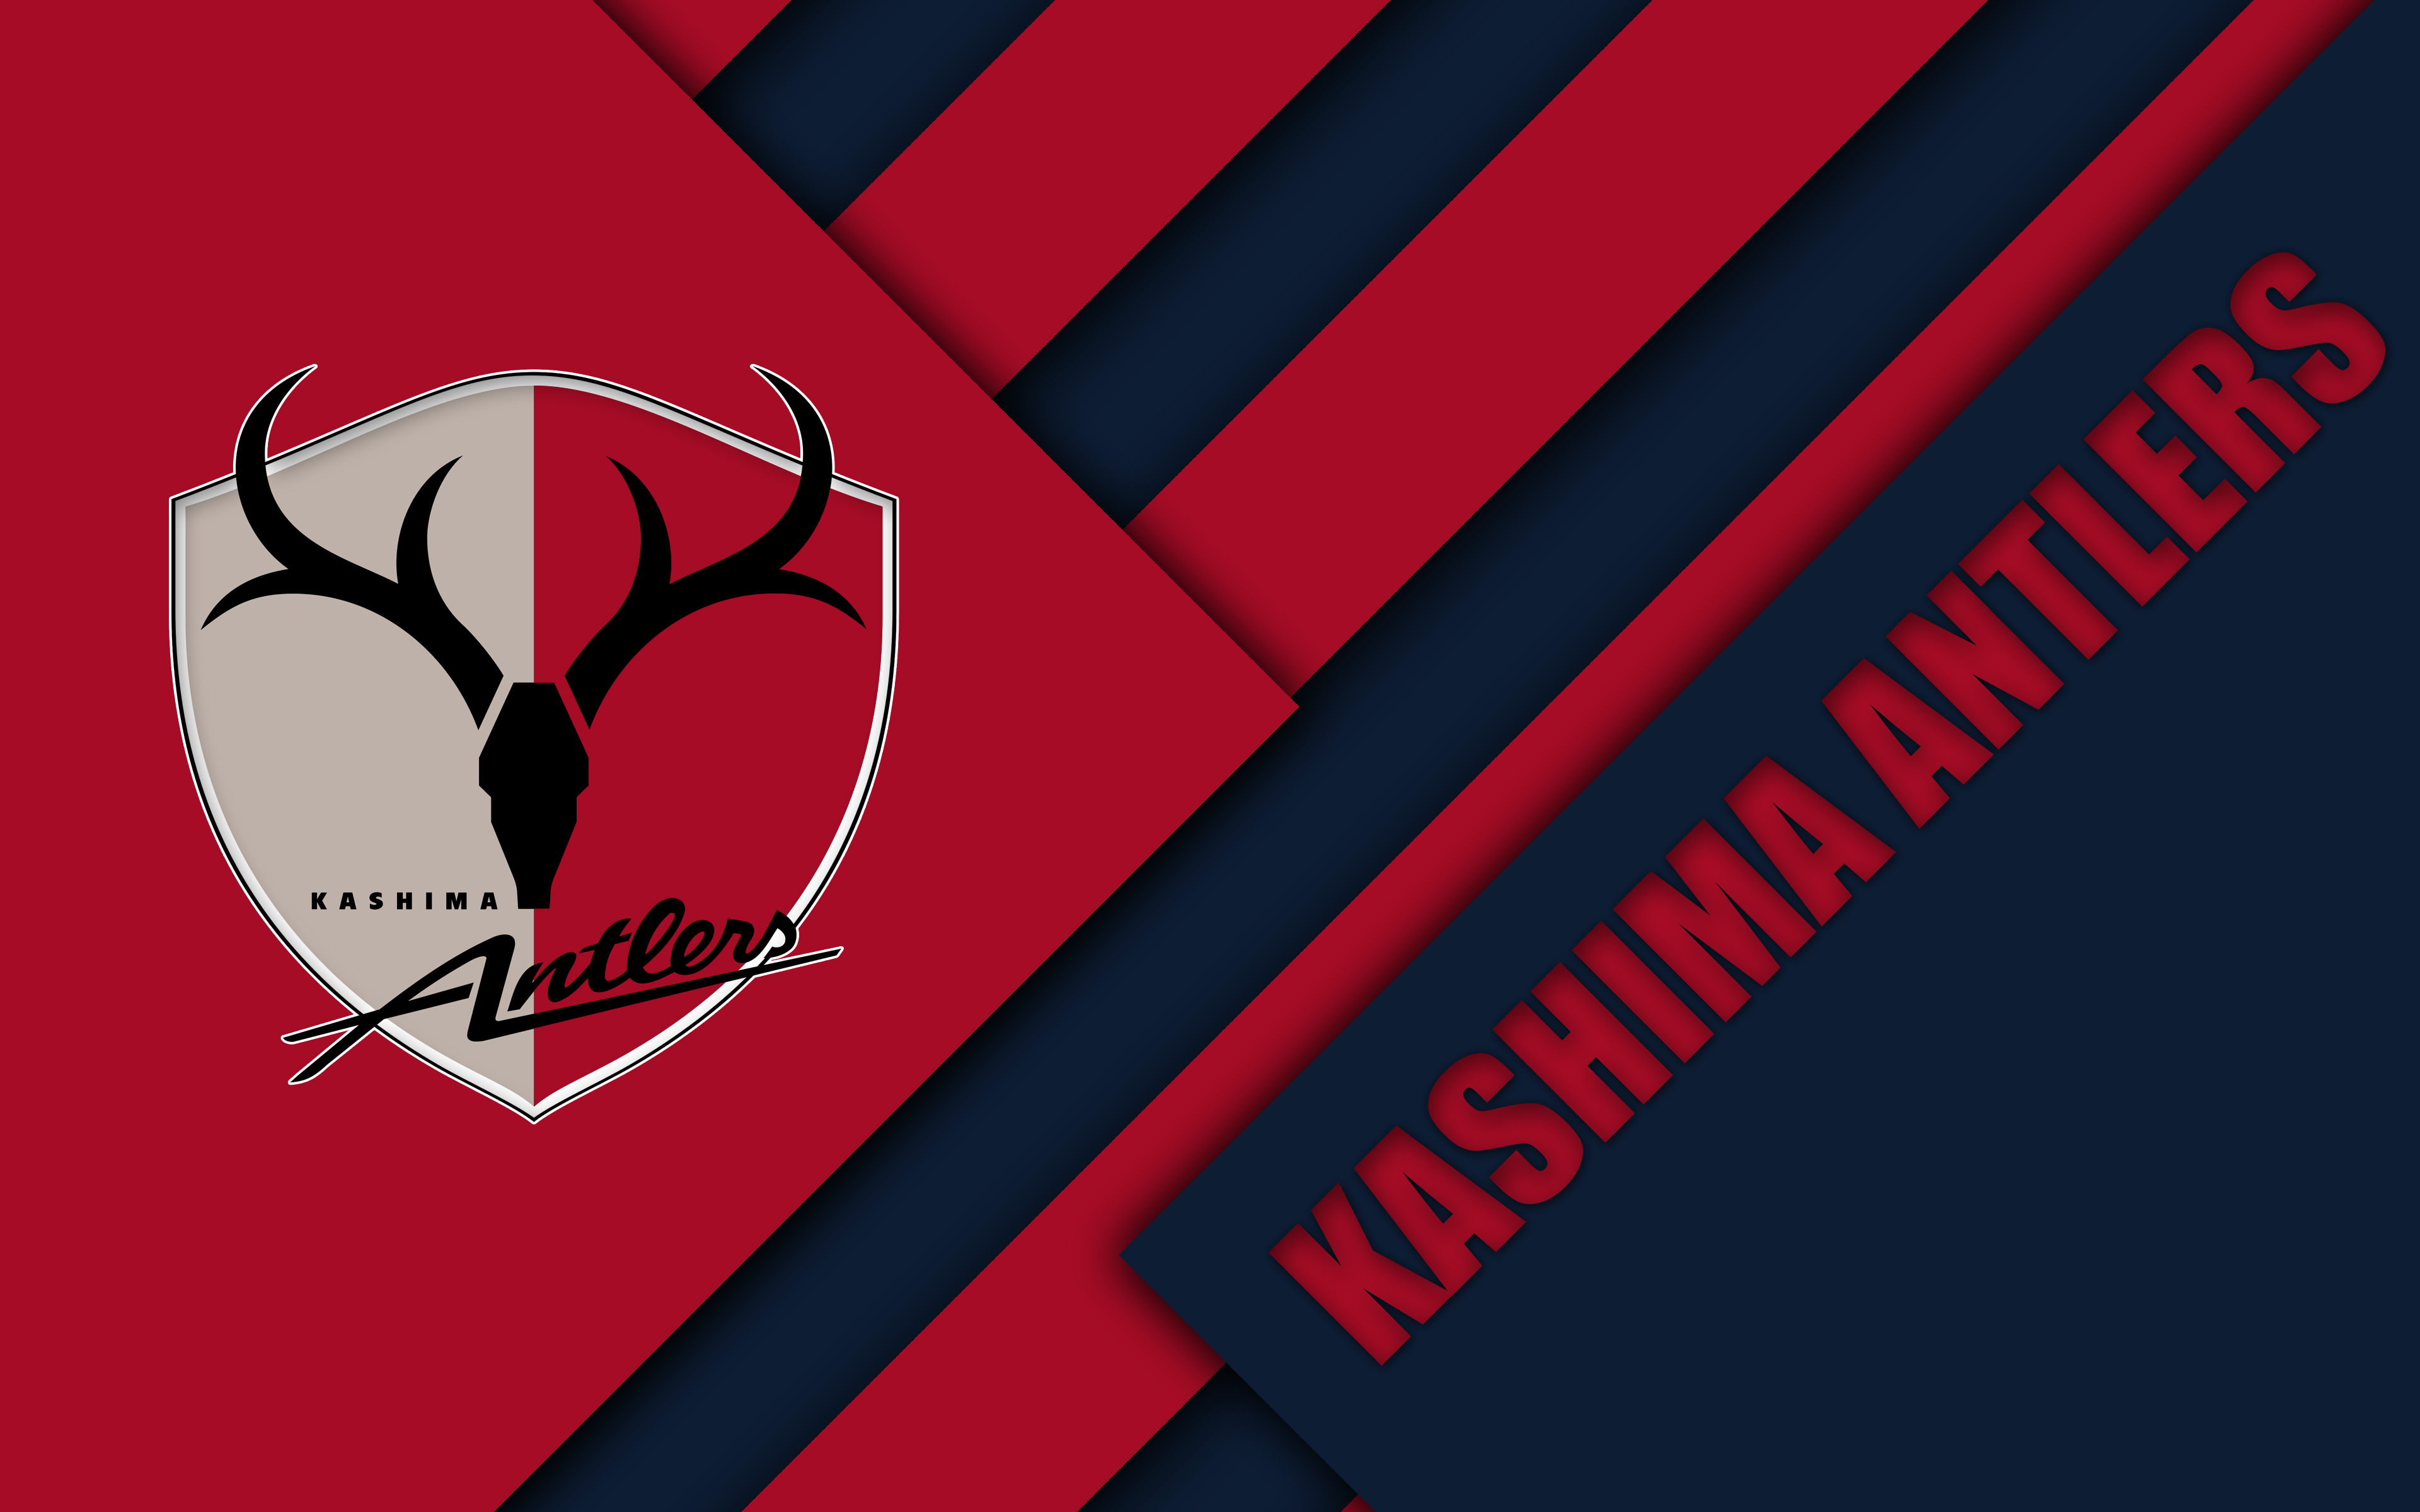 Kashima Antlers Logo 4k Ultra HD Wallpaper. Background Image